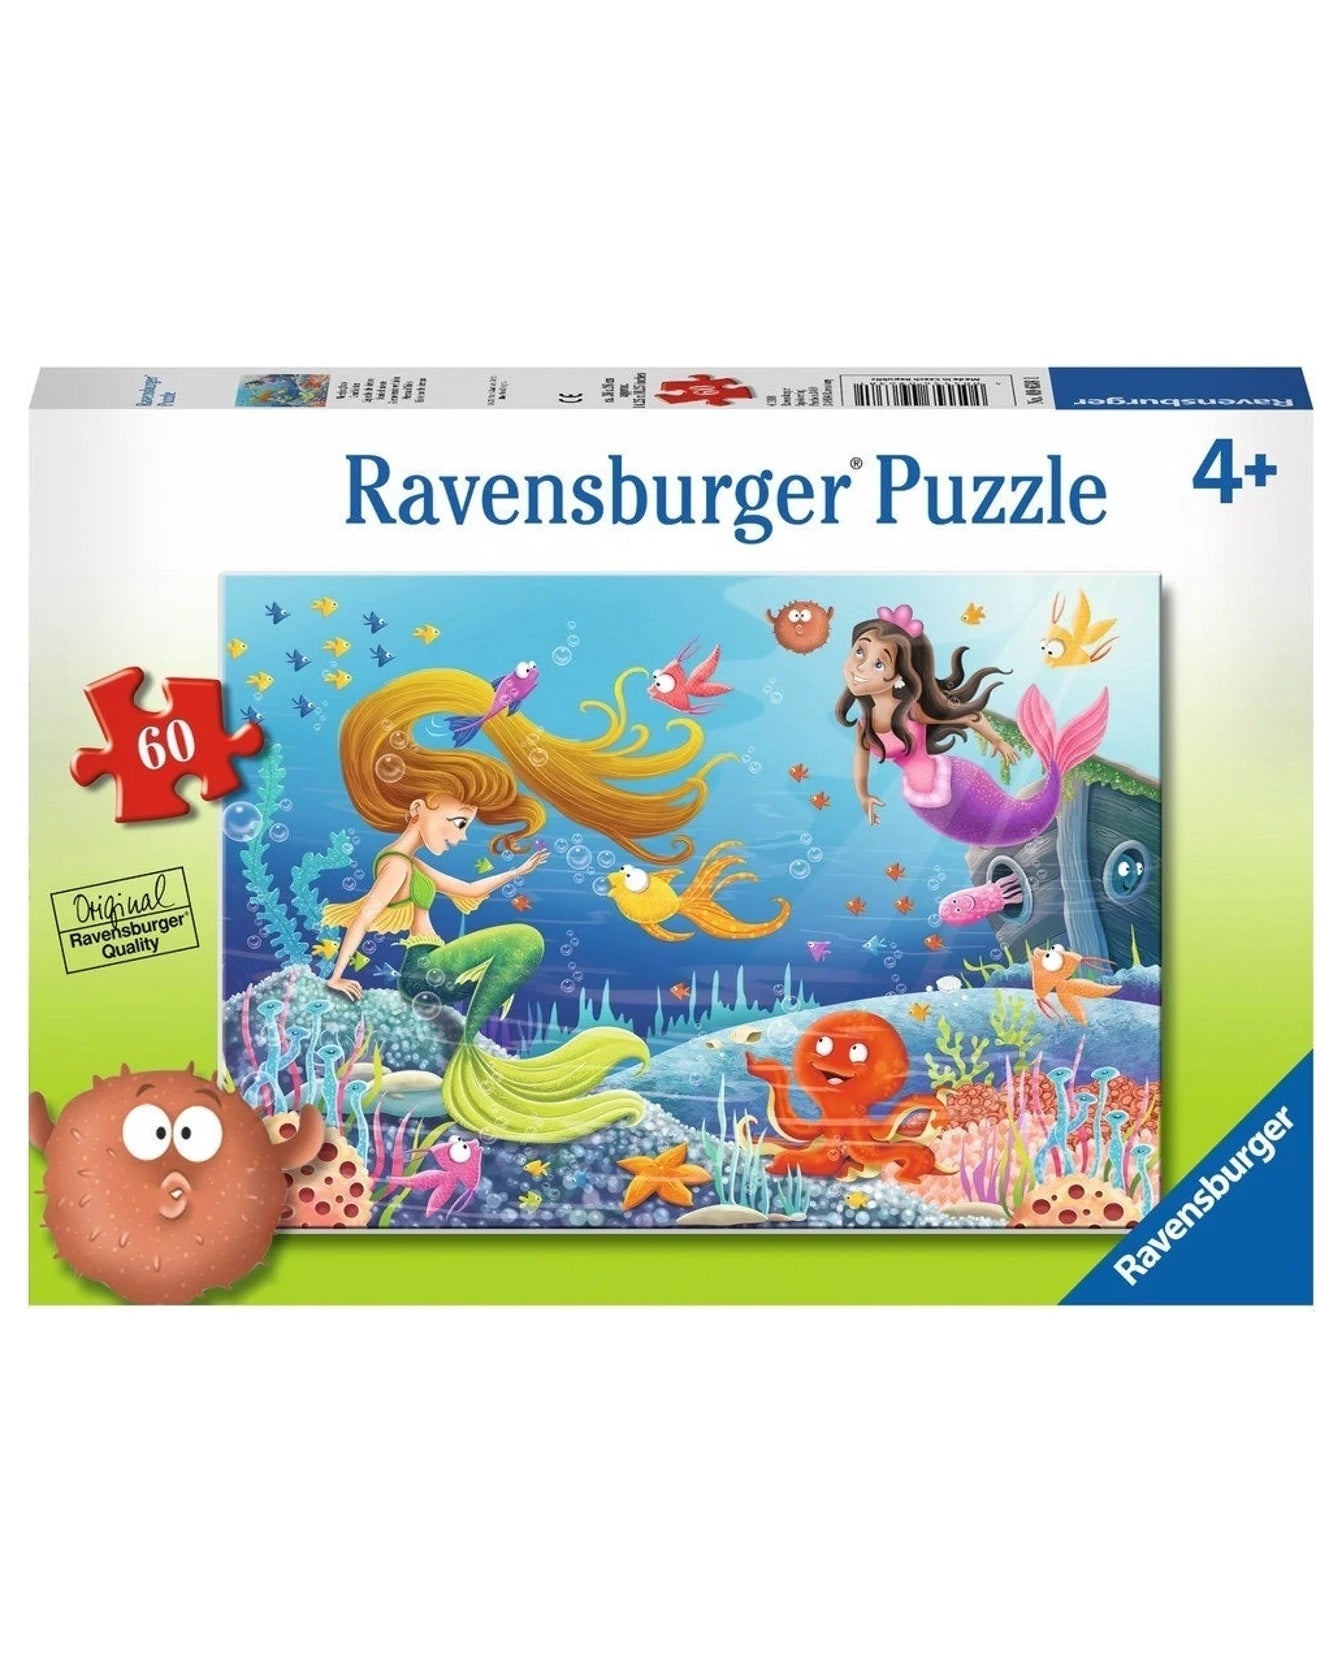 Ravensburger Puzzle - Mermaid Tales 60pc